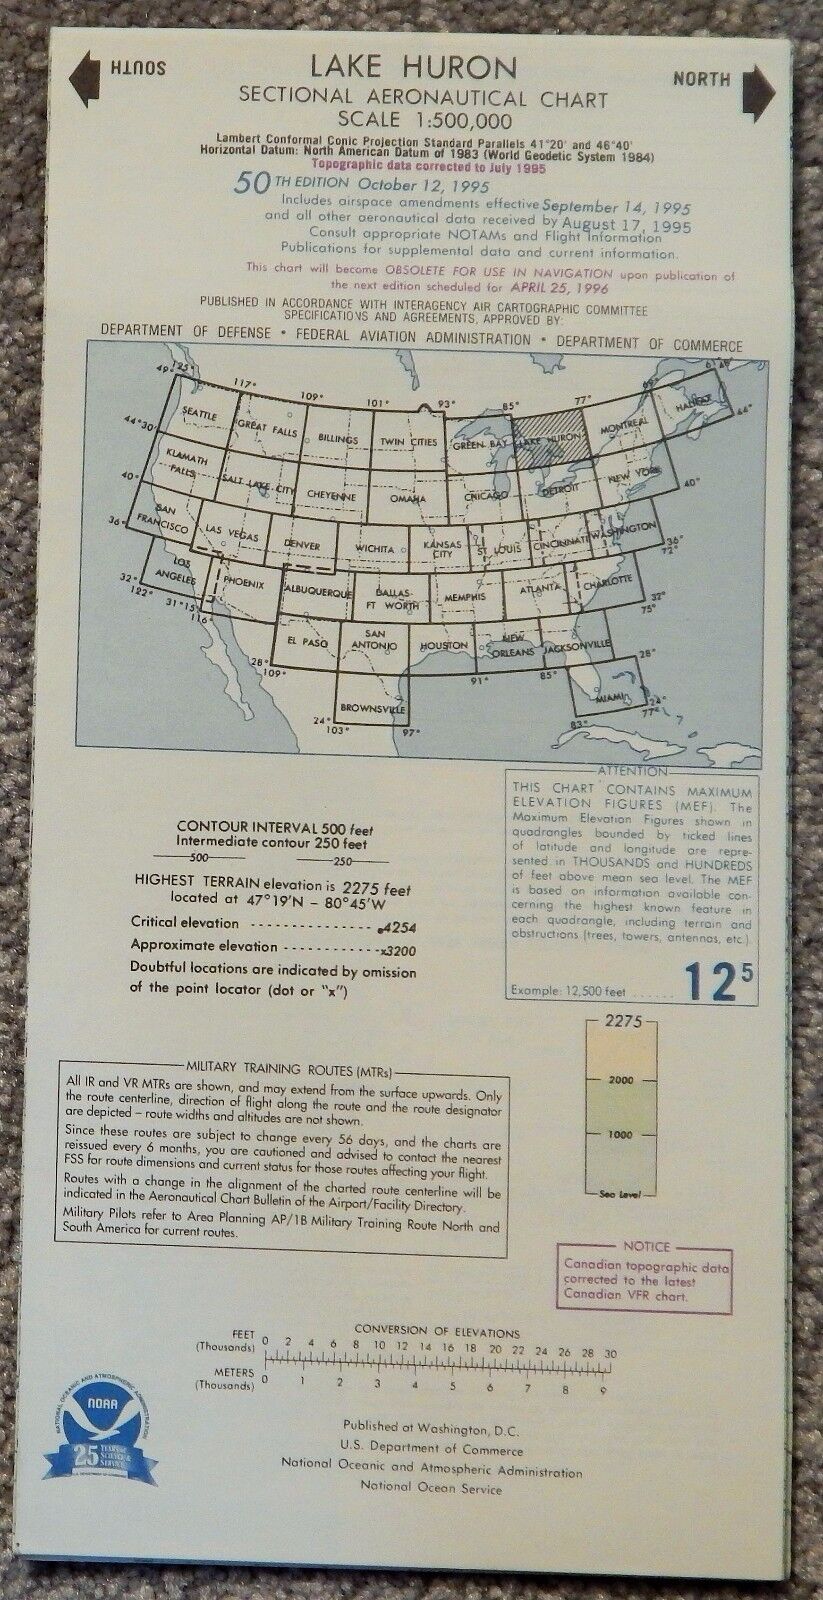 NOAA LAKE HURON SECTIONAL AERONAUTICAL CHART 50TH EDITION, OCTOBER 12, 1995 RARE